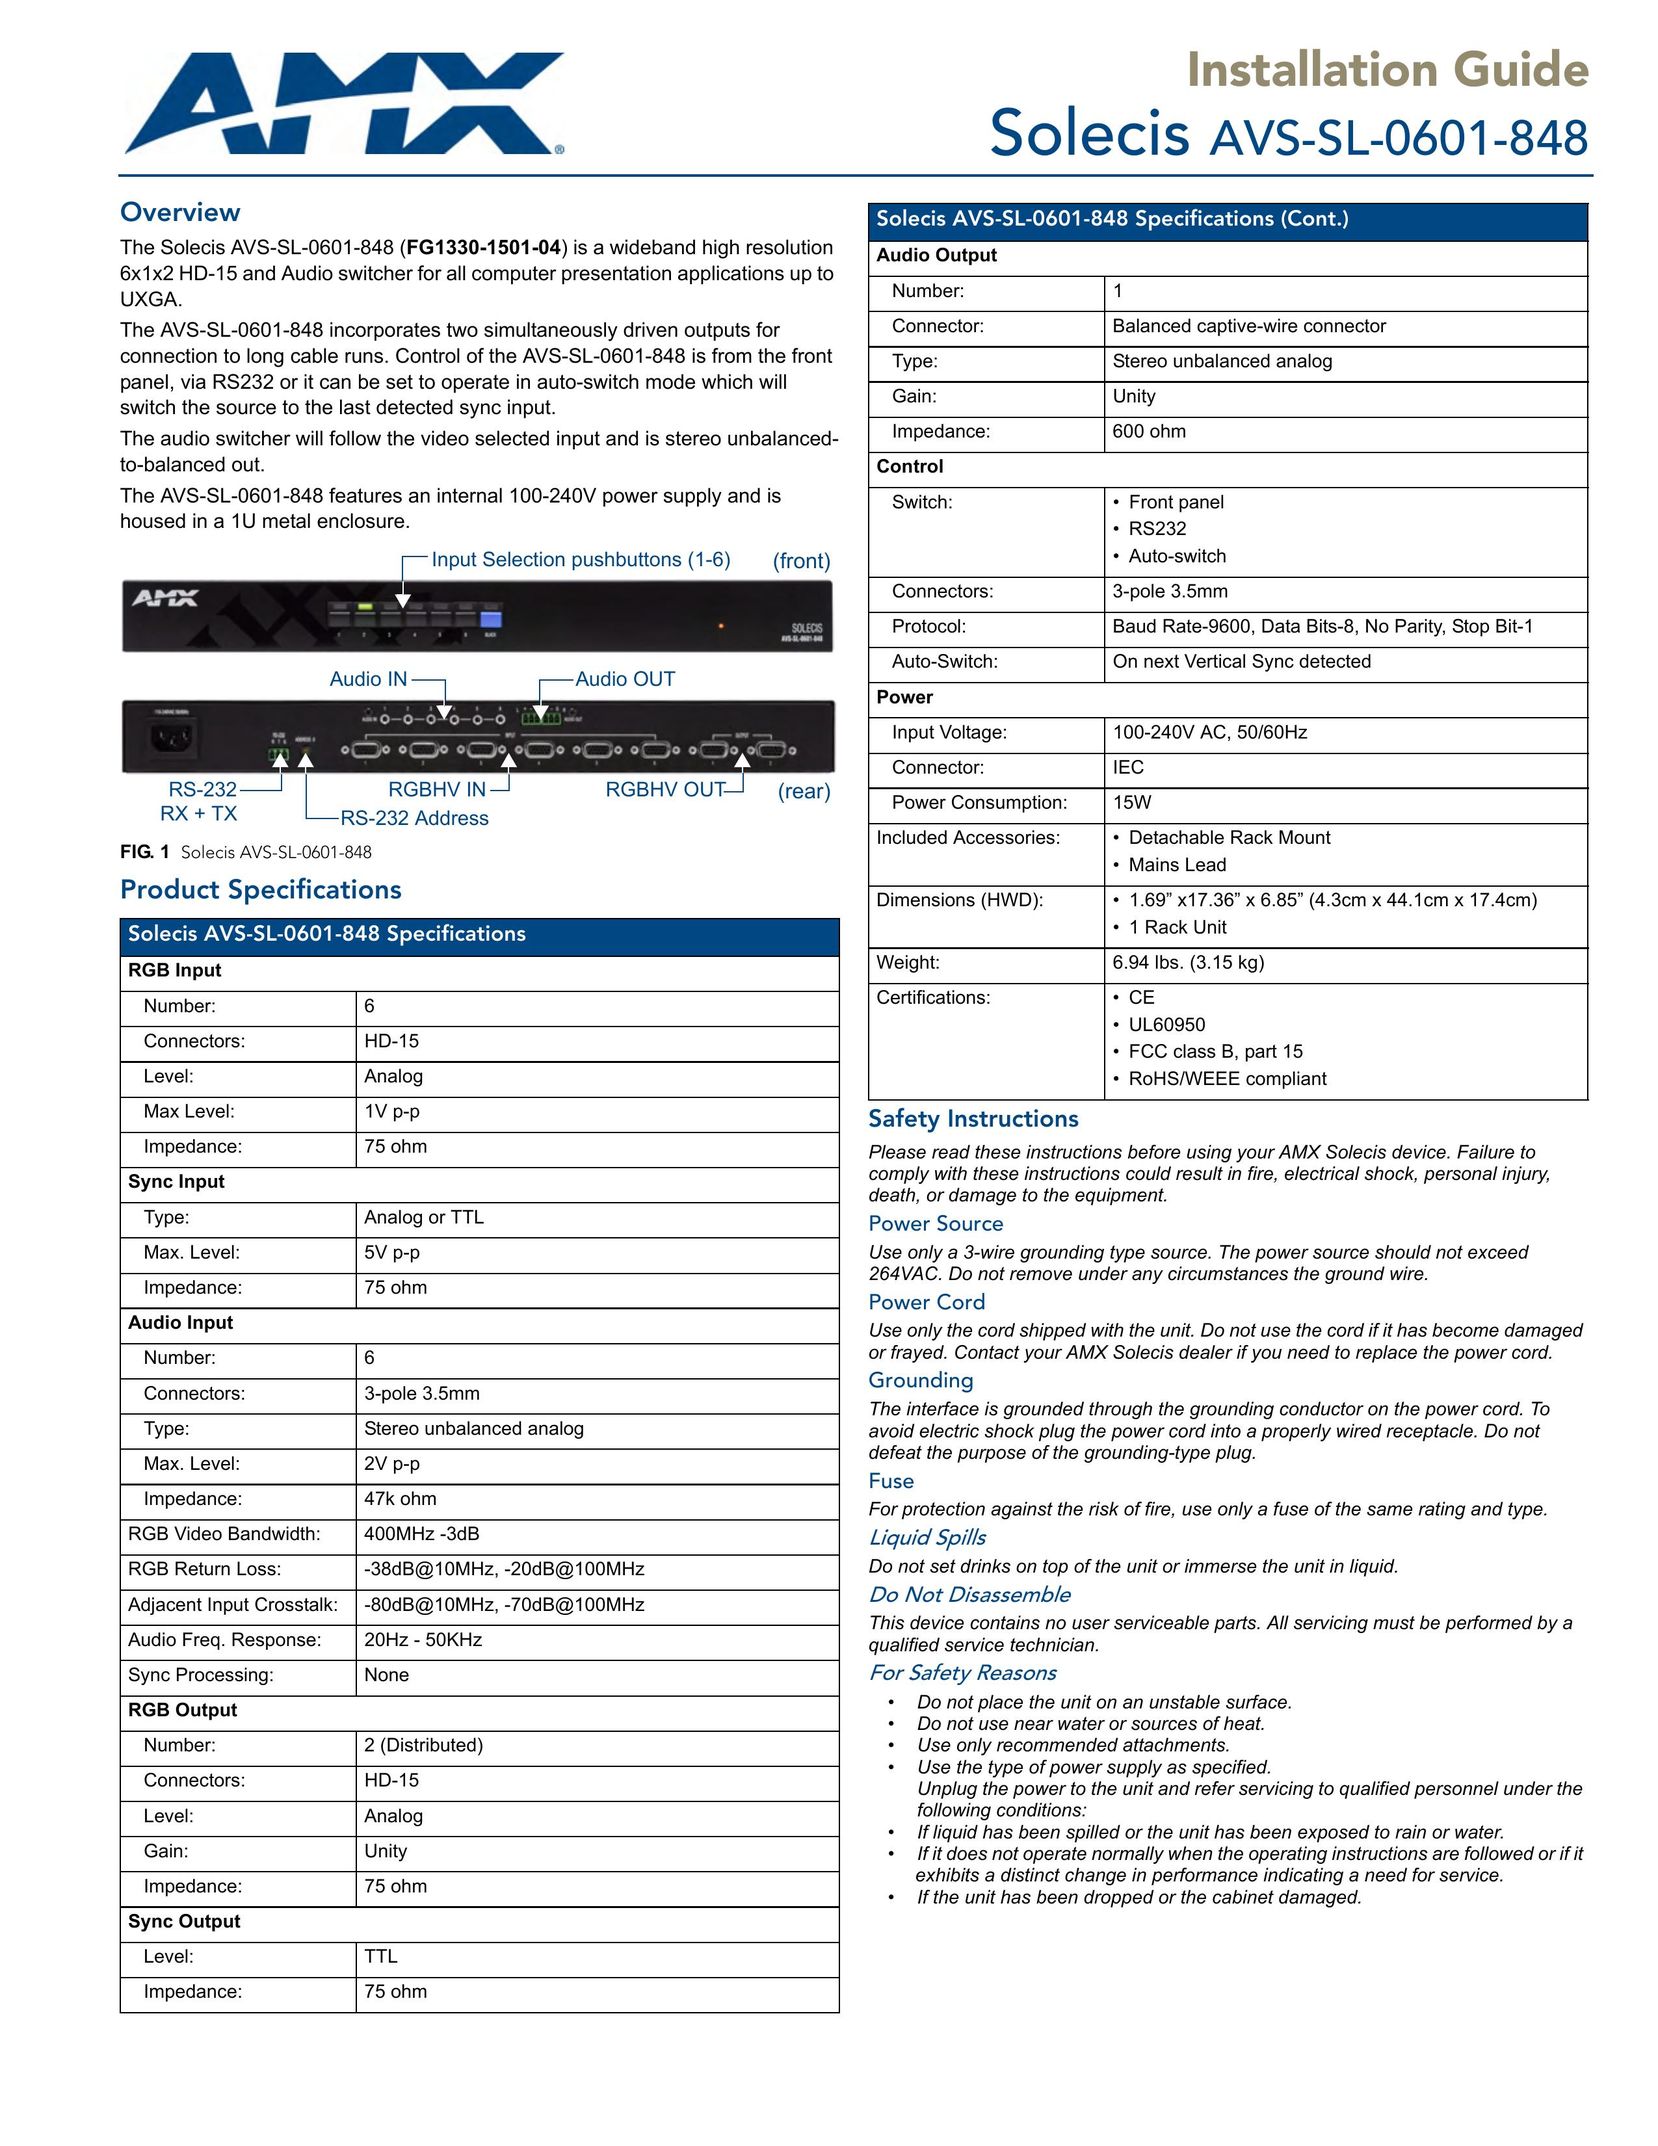 AMX AVS-SL-0601-848 Network Card User Manual